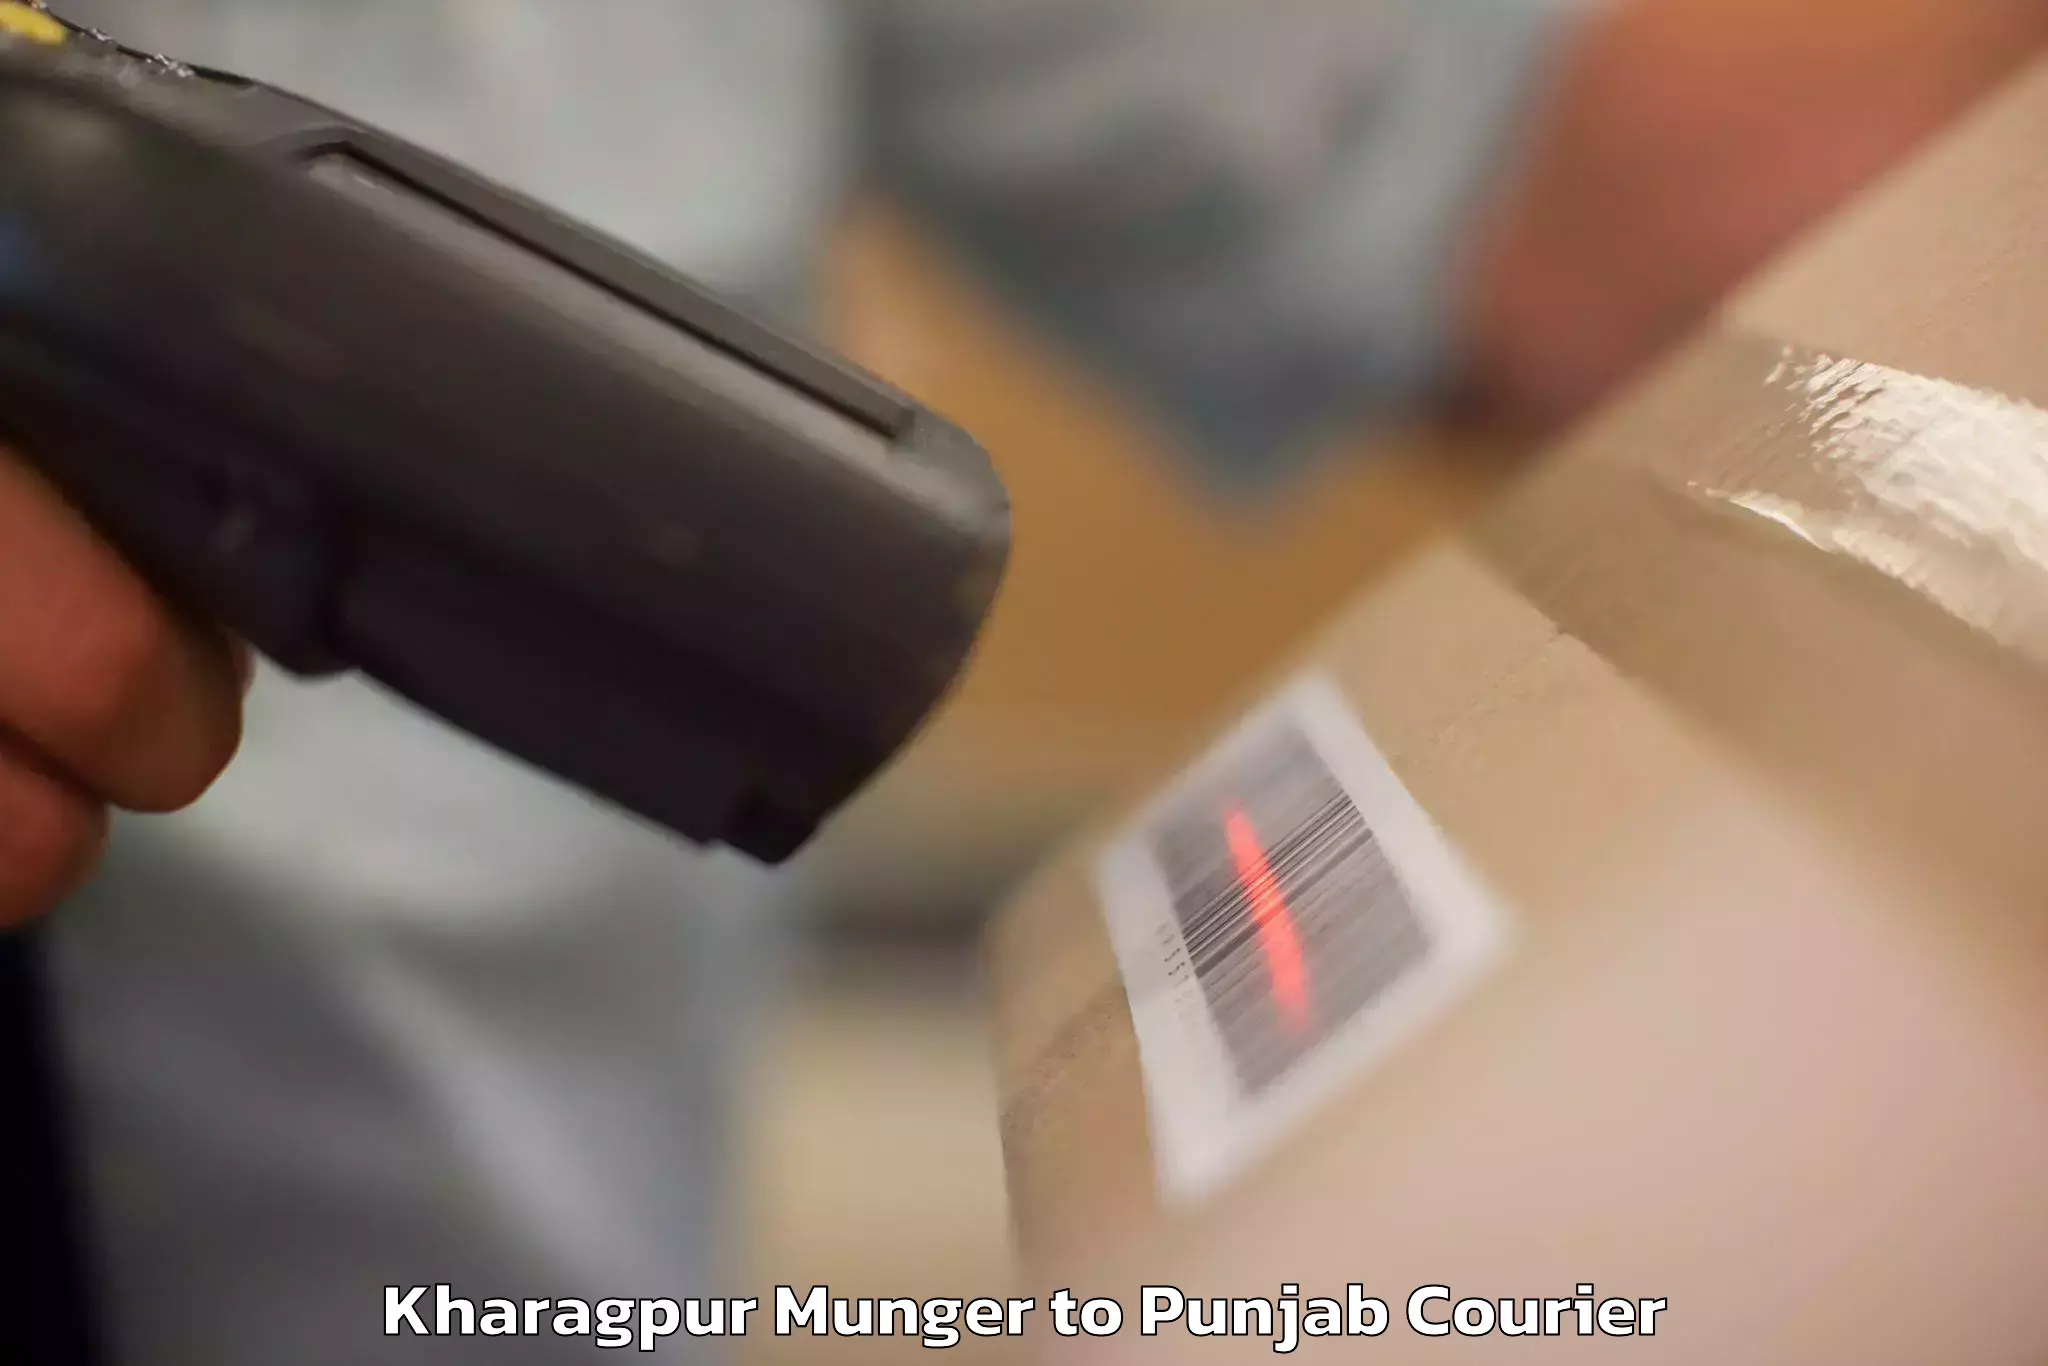 Luggage delivery app Kharagpur Munger to Punjab